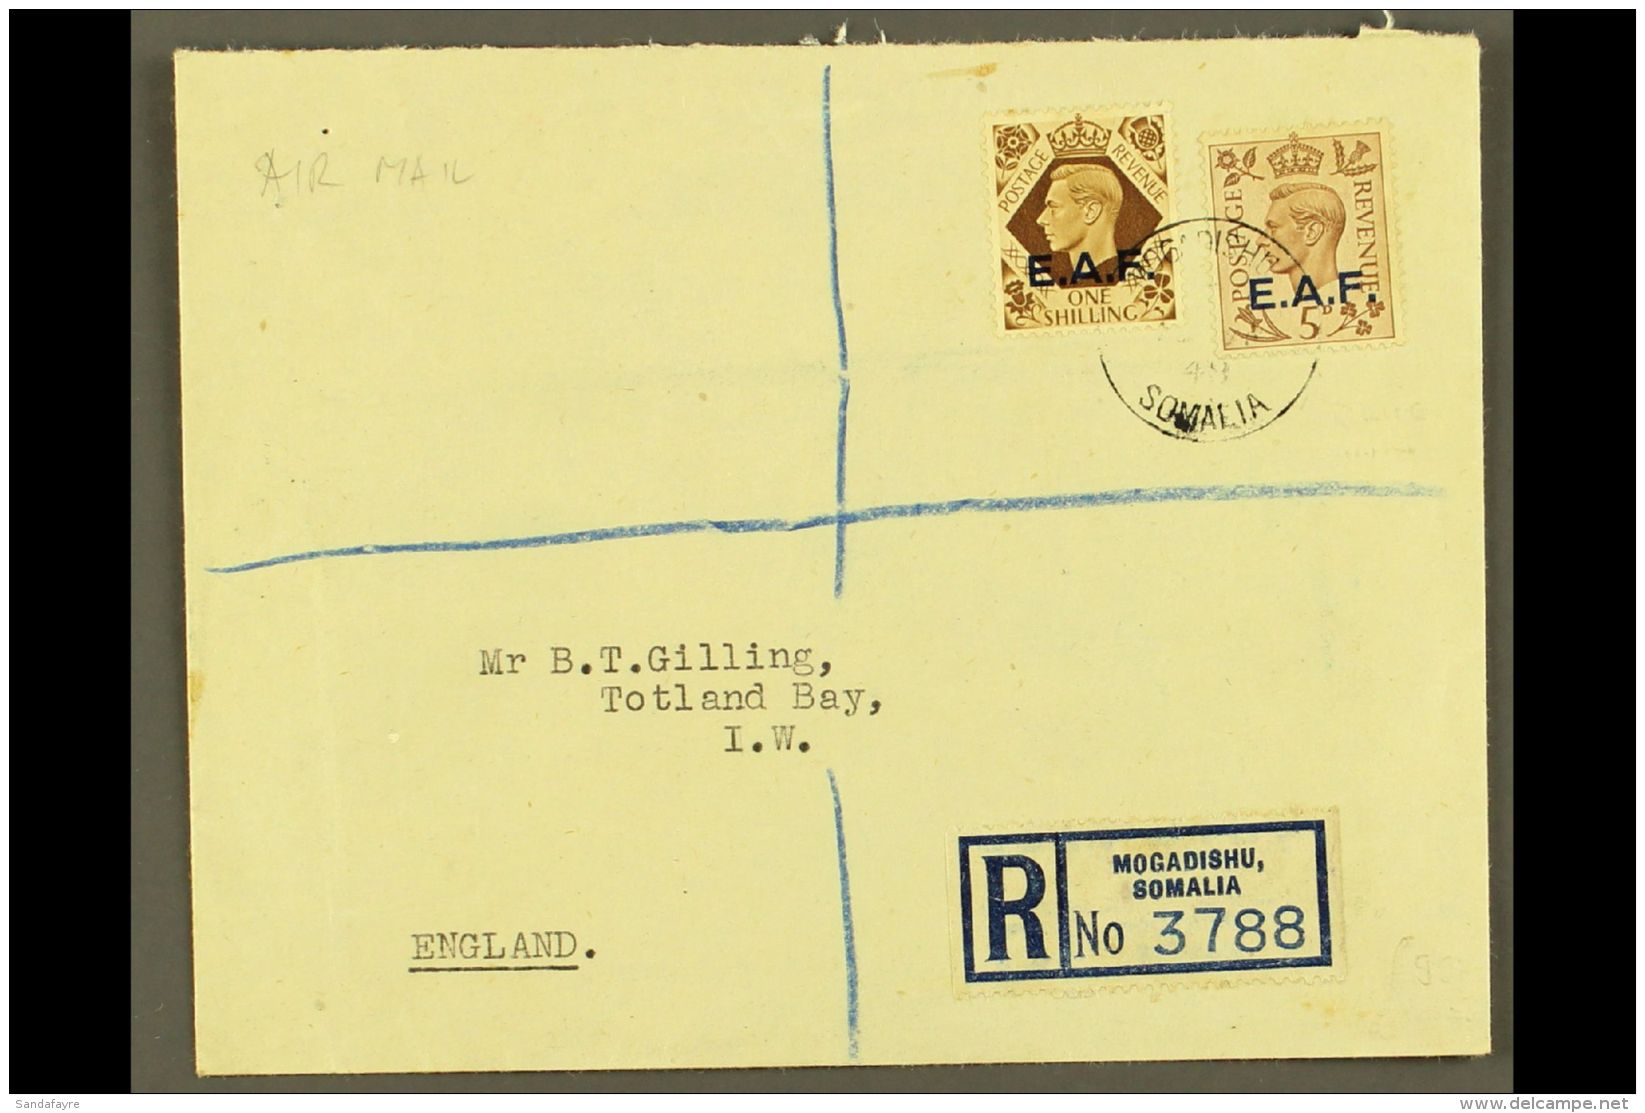 SOMALIA 1948 Registered Cover To England Franked With KGVI 5d &amp; 1s Values Ovptd "E.A.F." SG S5, S8, Reg'd... - Italian Eastern Africa